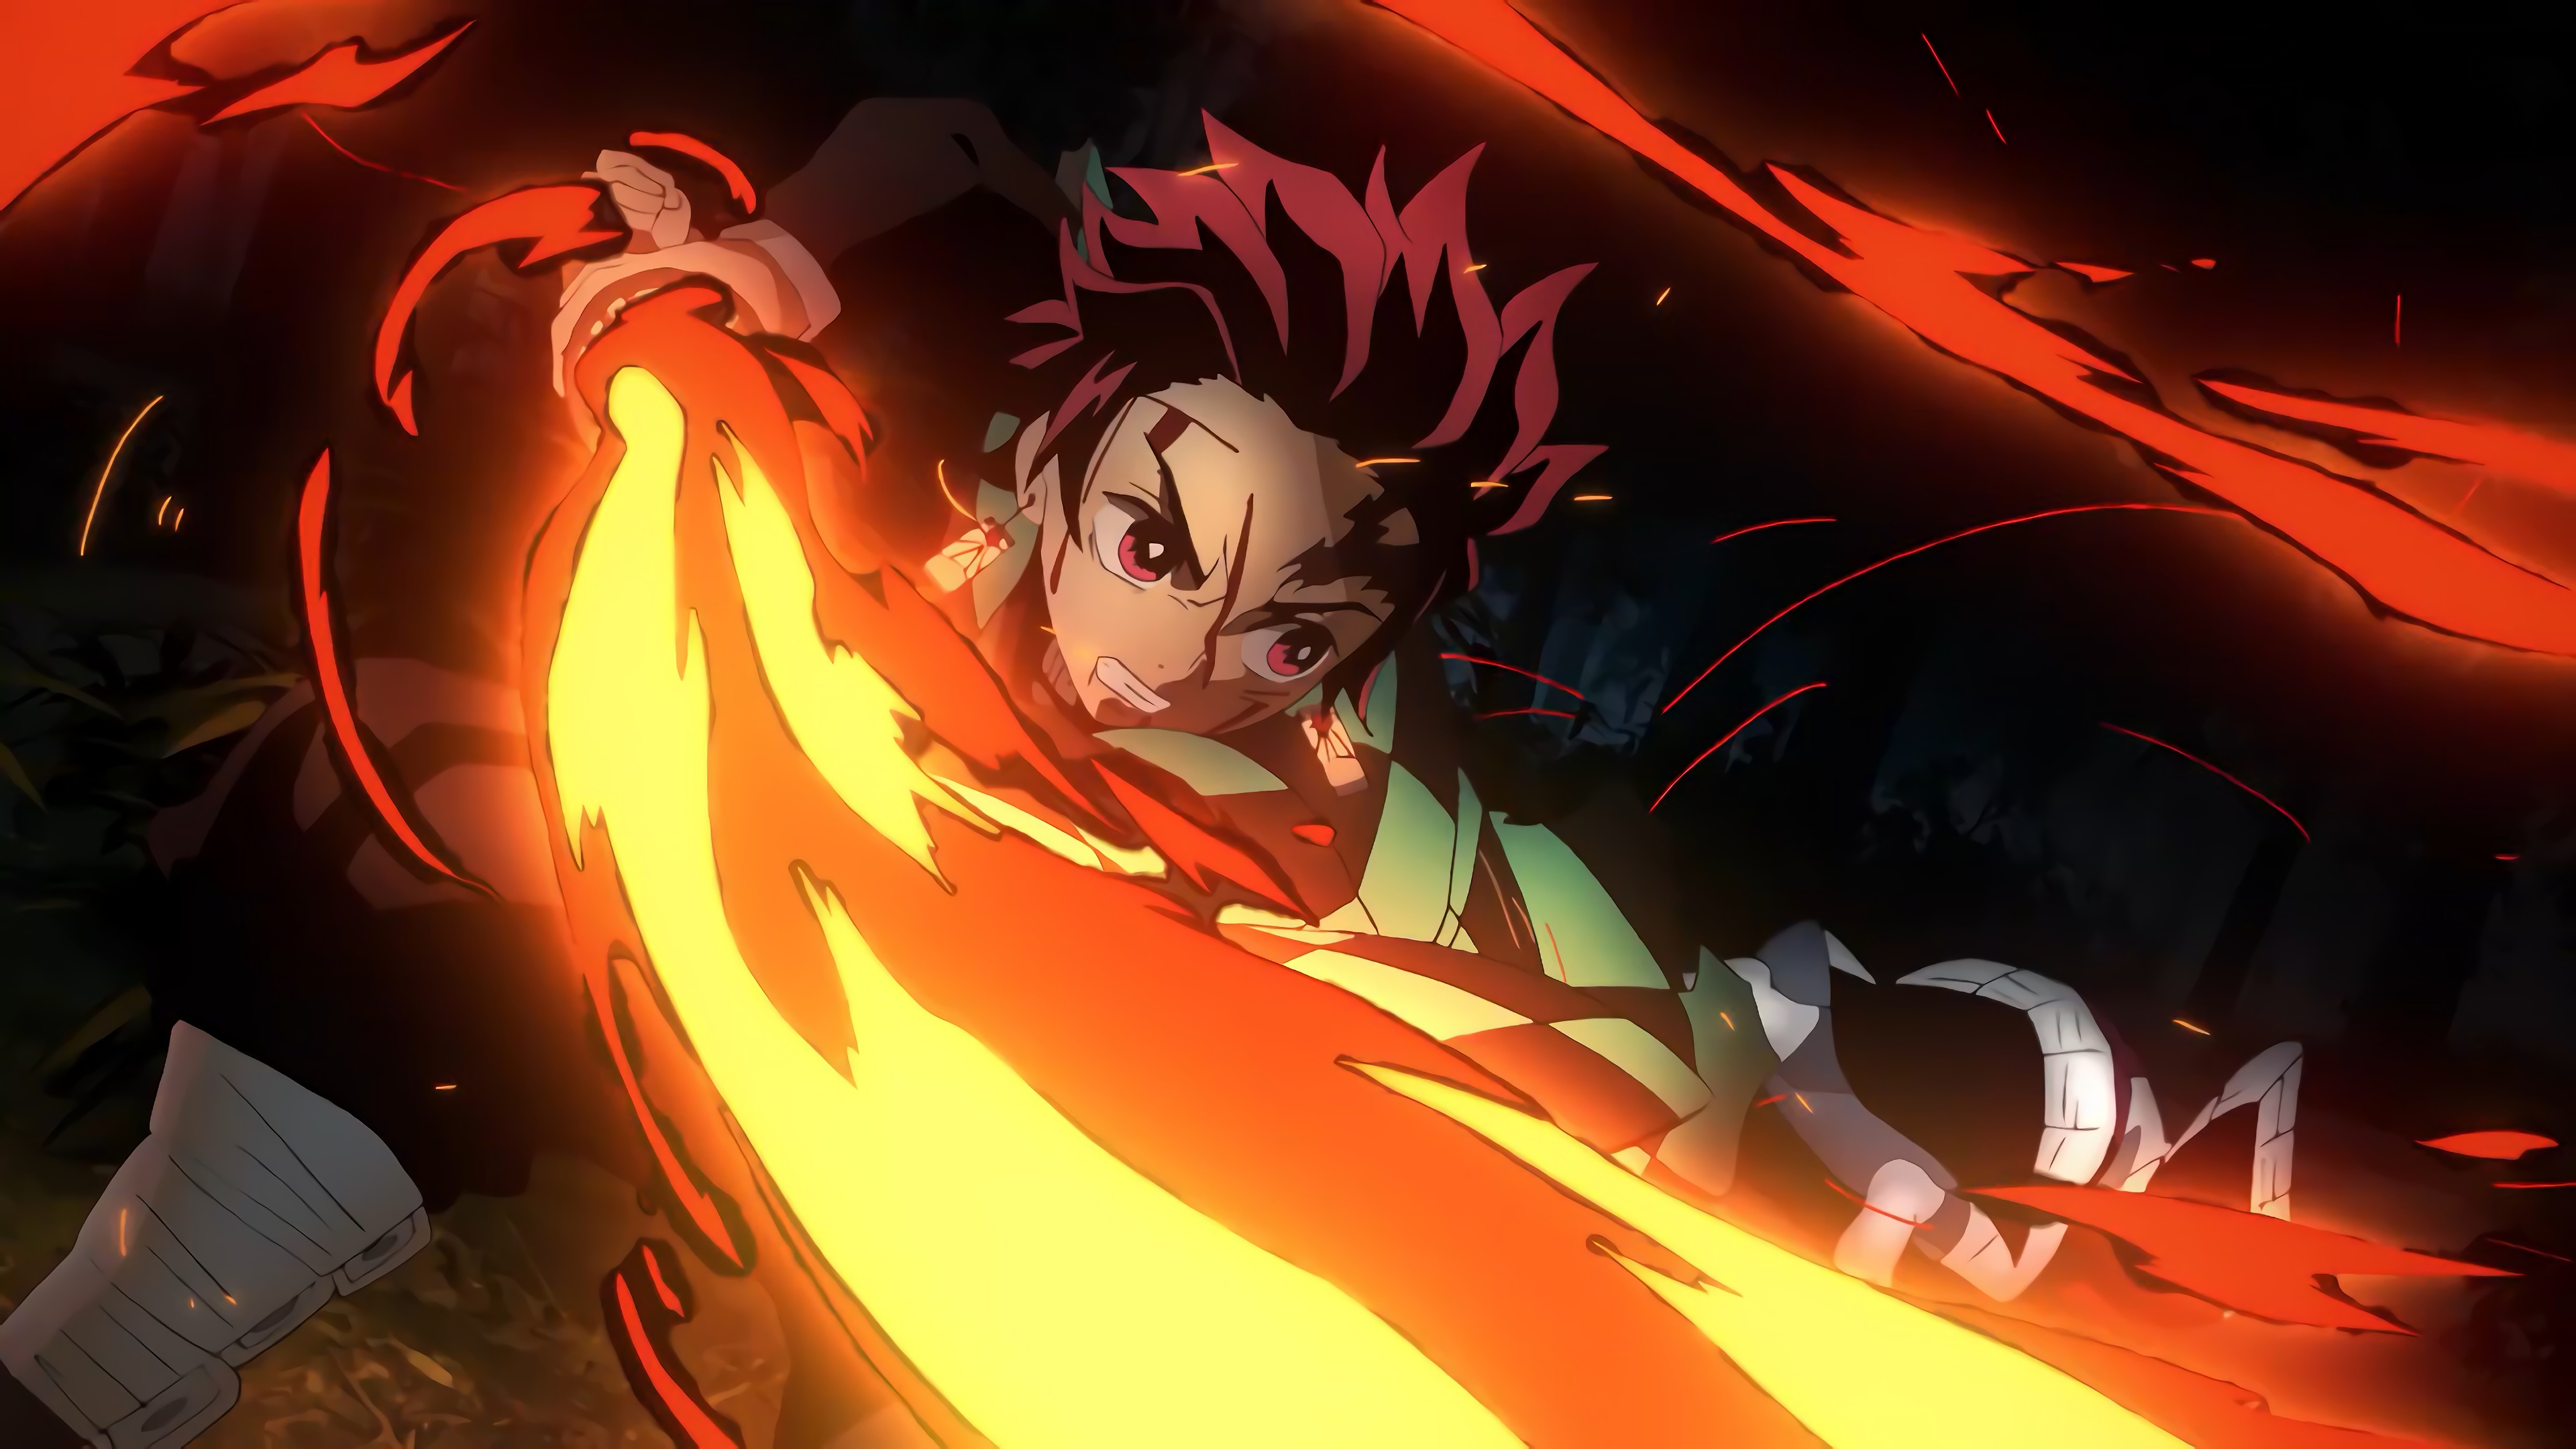 Fondos de pantalla Tanjiro con katana en llamas del anime Kimetsu no Yaiba